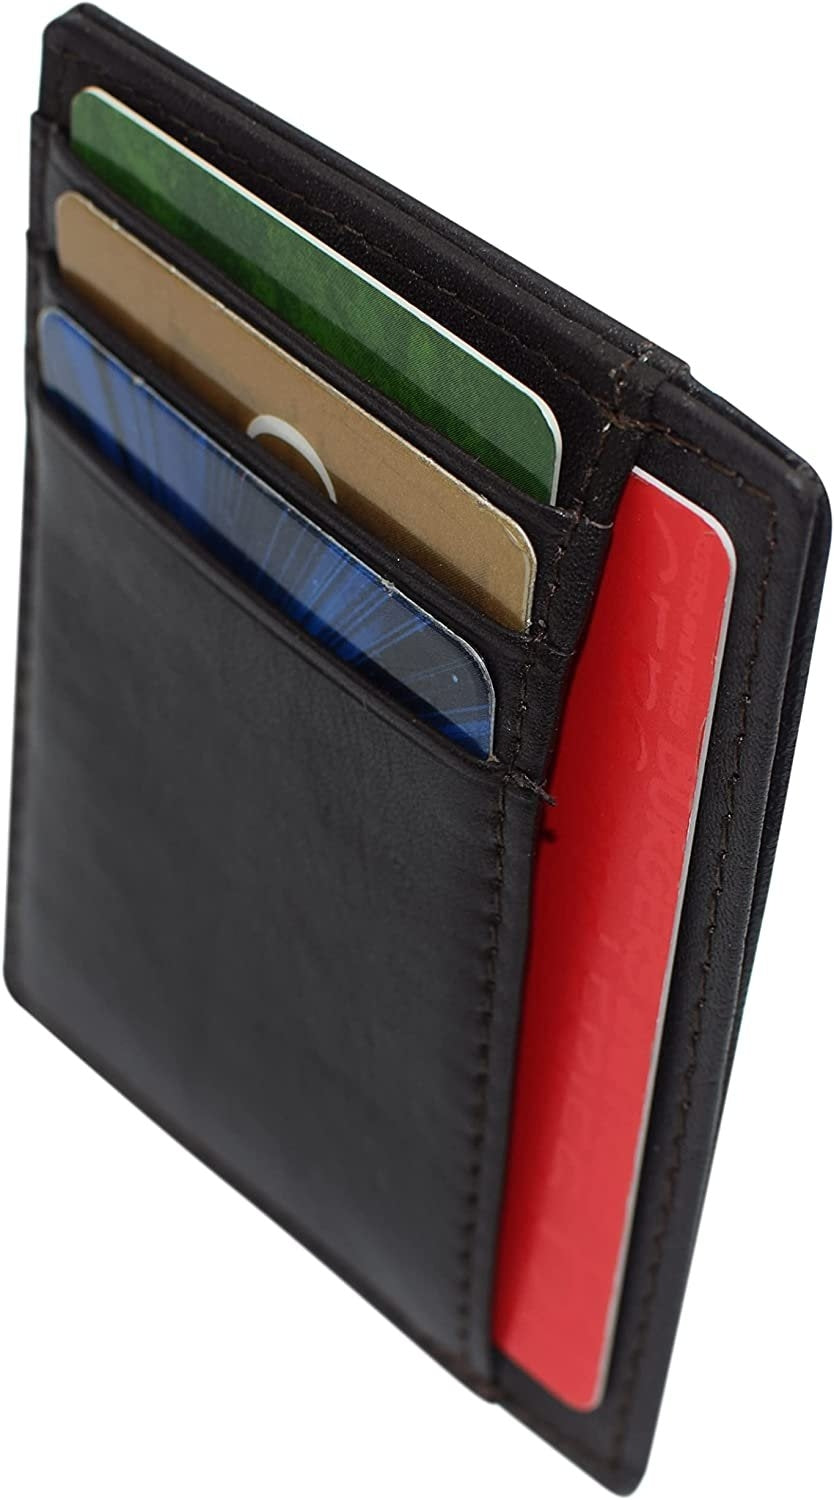 Swiss Marshall RFID Blocking Front Pocket Leather Slim Credit Card Case Holder Wallet Image 8